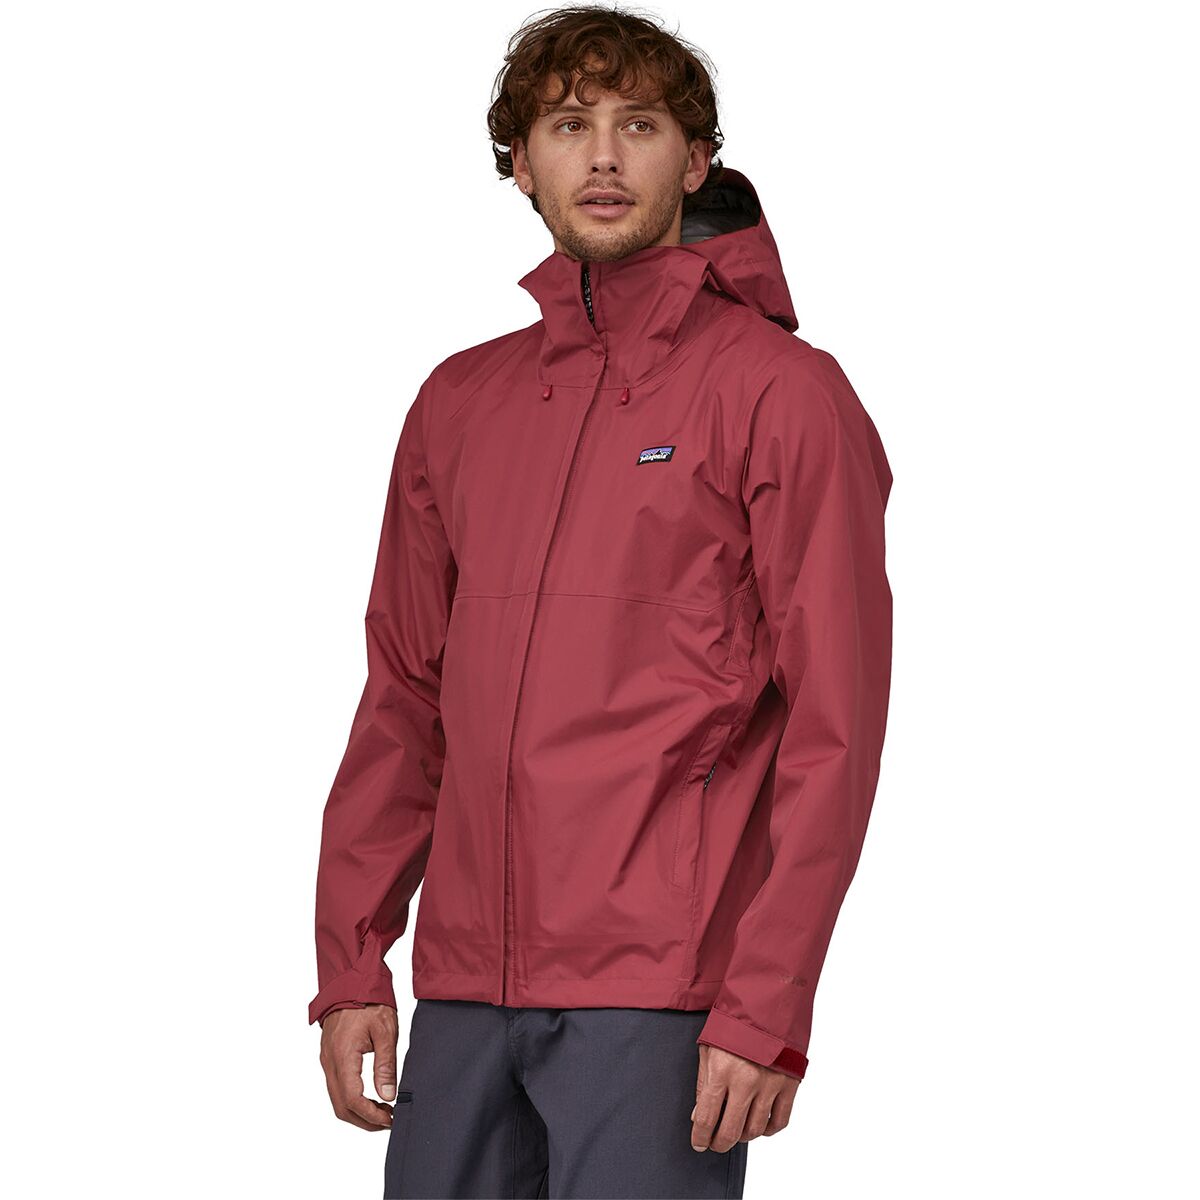 Patagonia Men's Torrentshell 3L Jacket, Wax Red / S